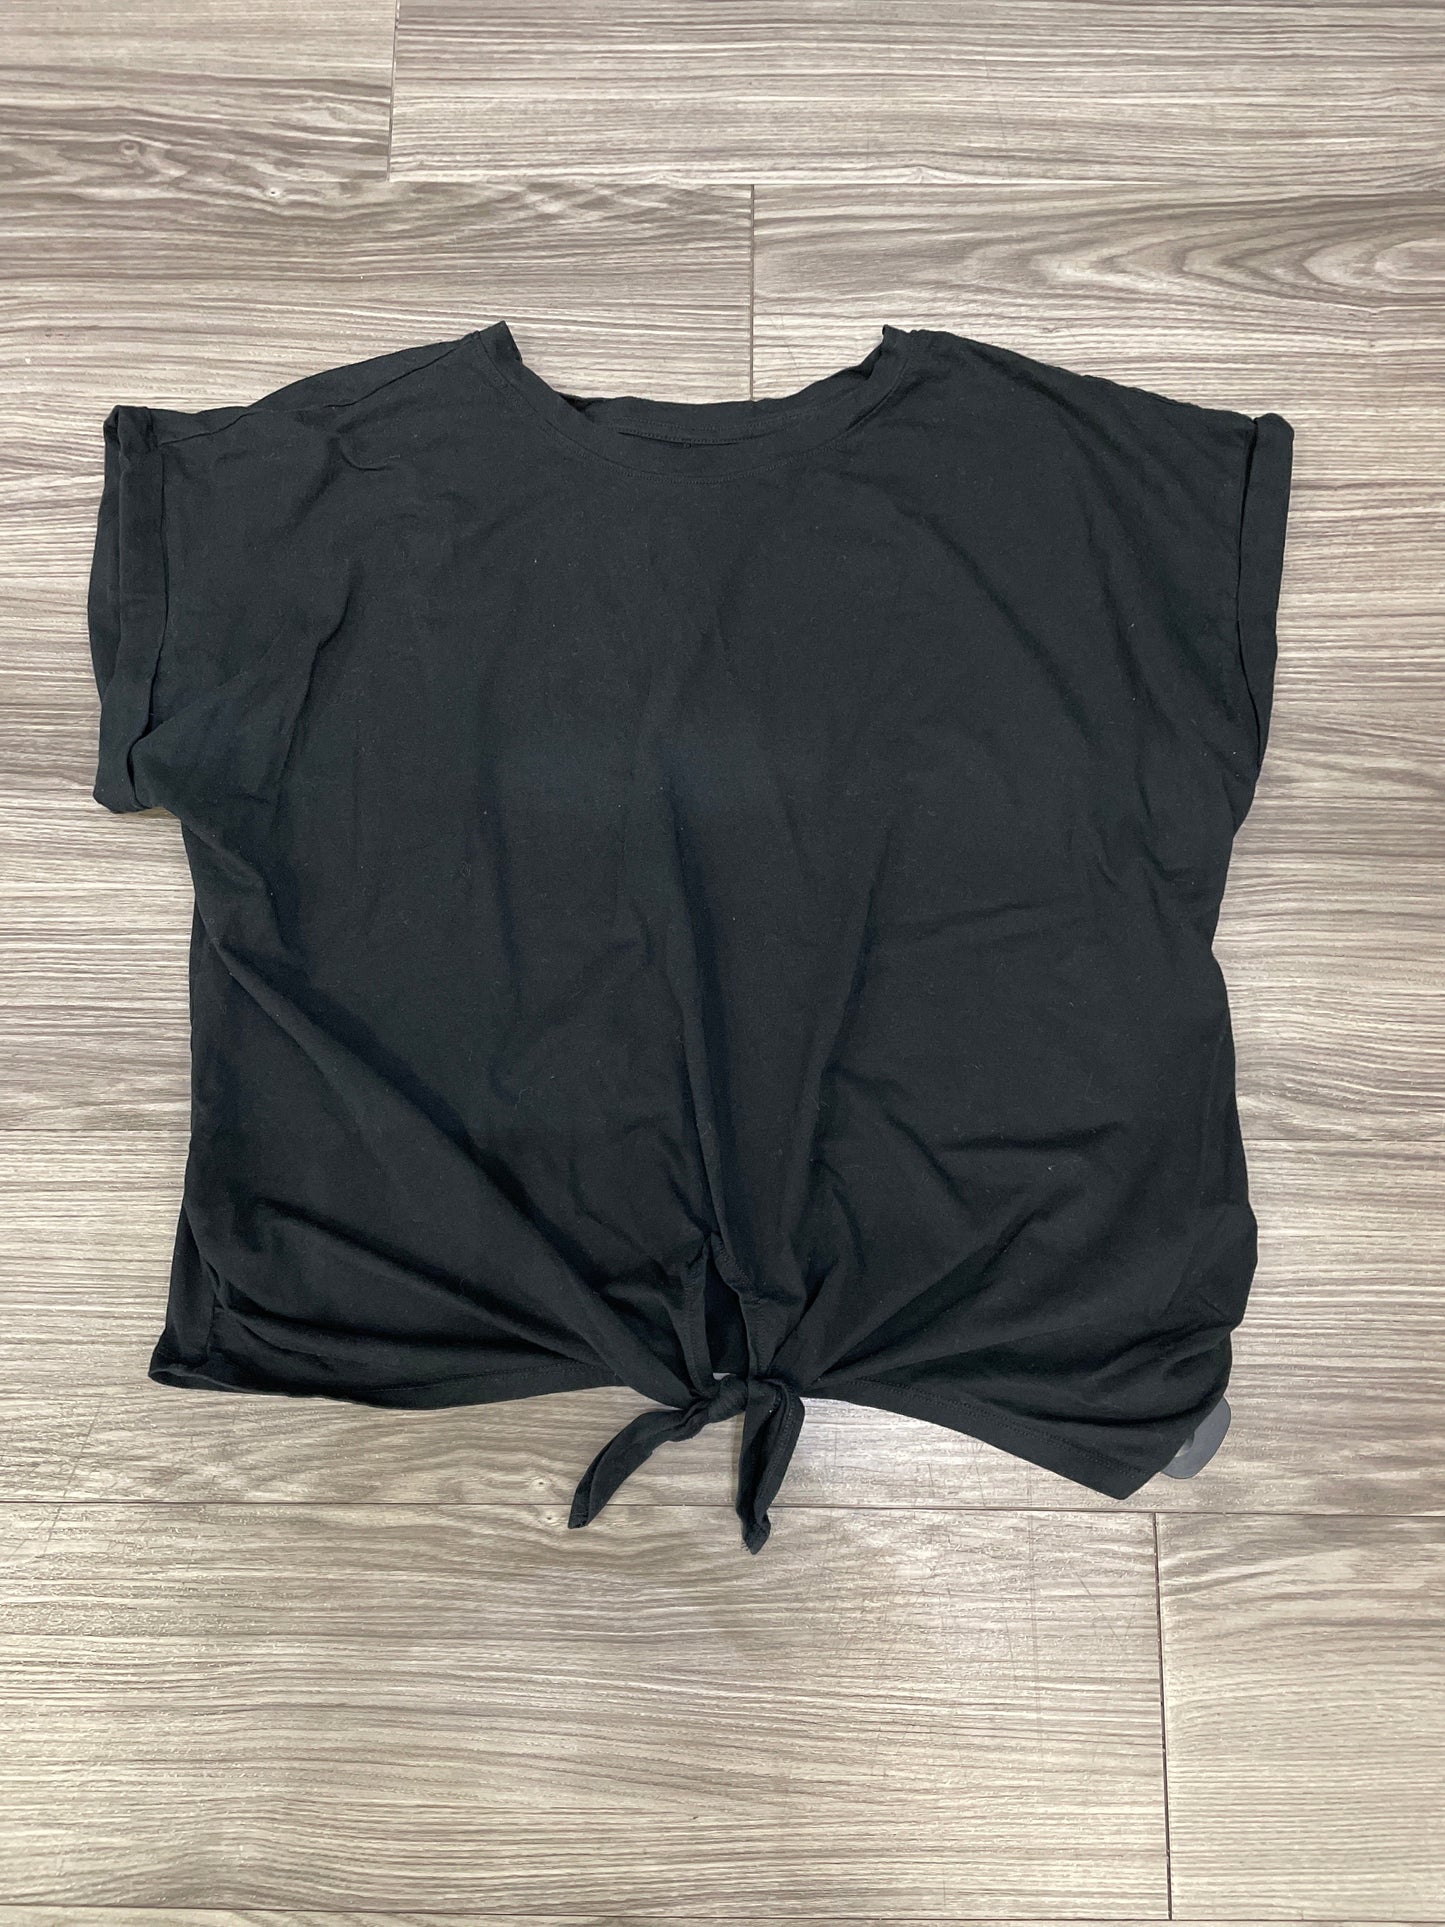 Black Top Short Sleeve Ava & Viv, Size 2x